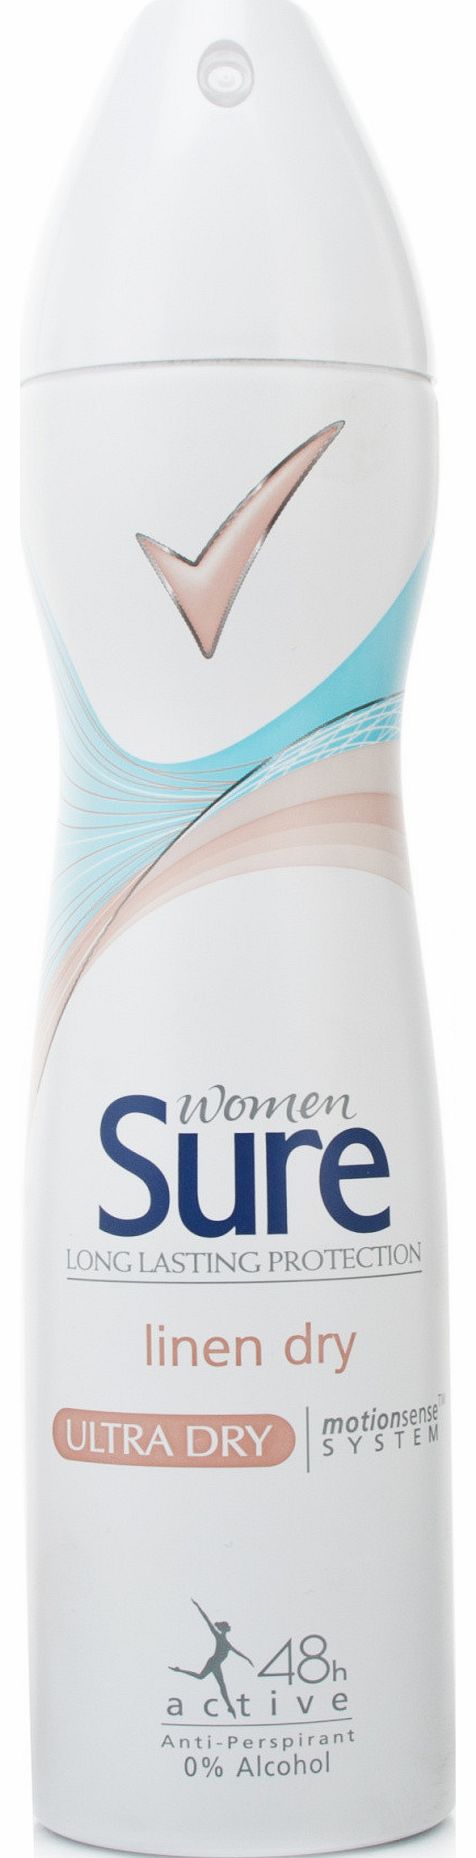 Sure Women Linen Dry Ultra Dry 48h Active